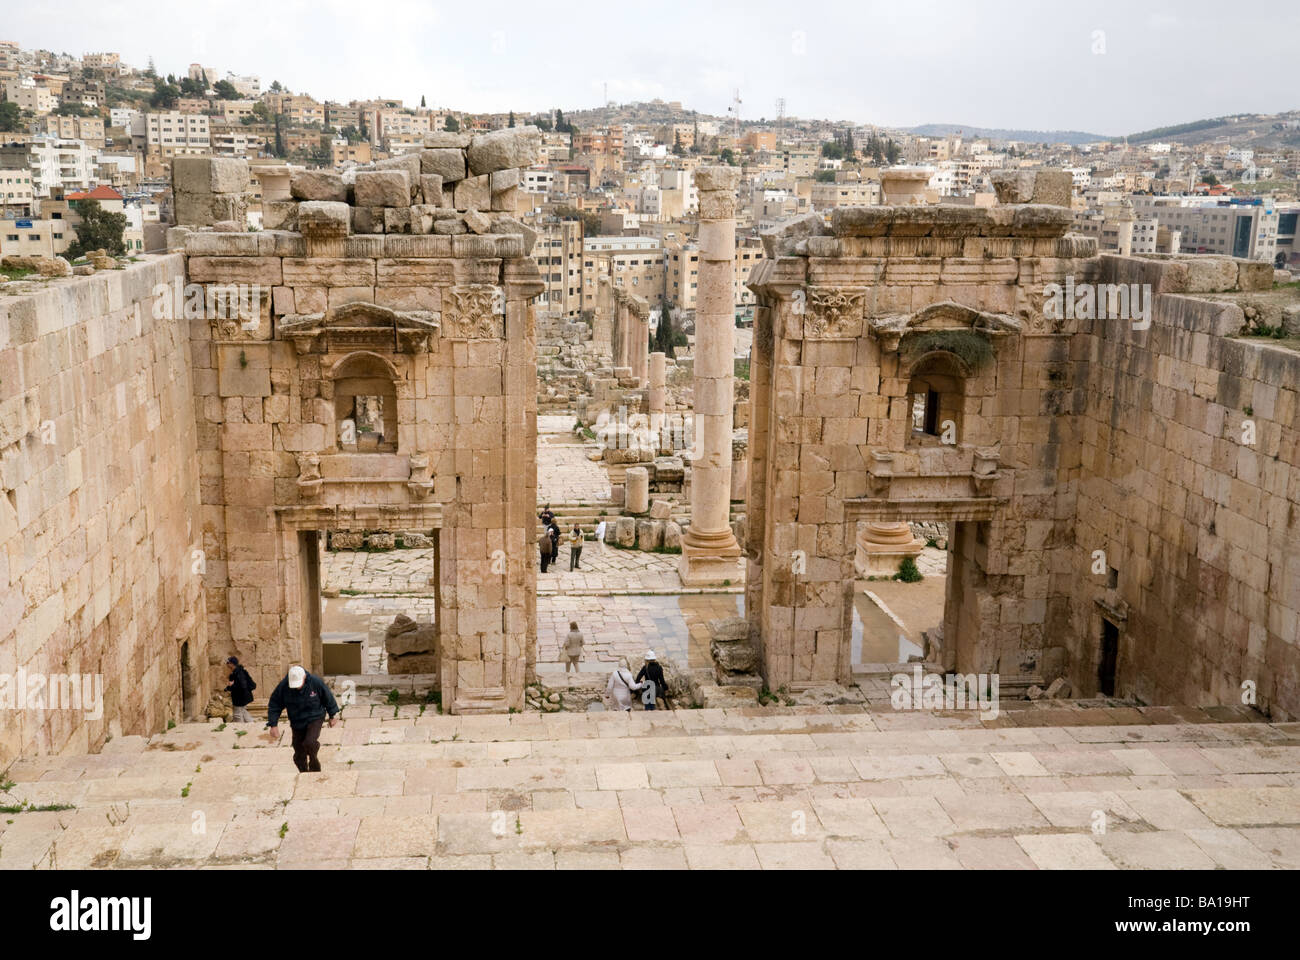 Looking from the ancient roman town of Jerash towards the modern town, Jerash, Jordan Stock Photo